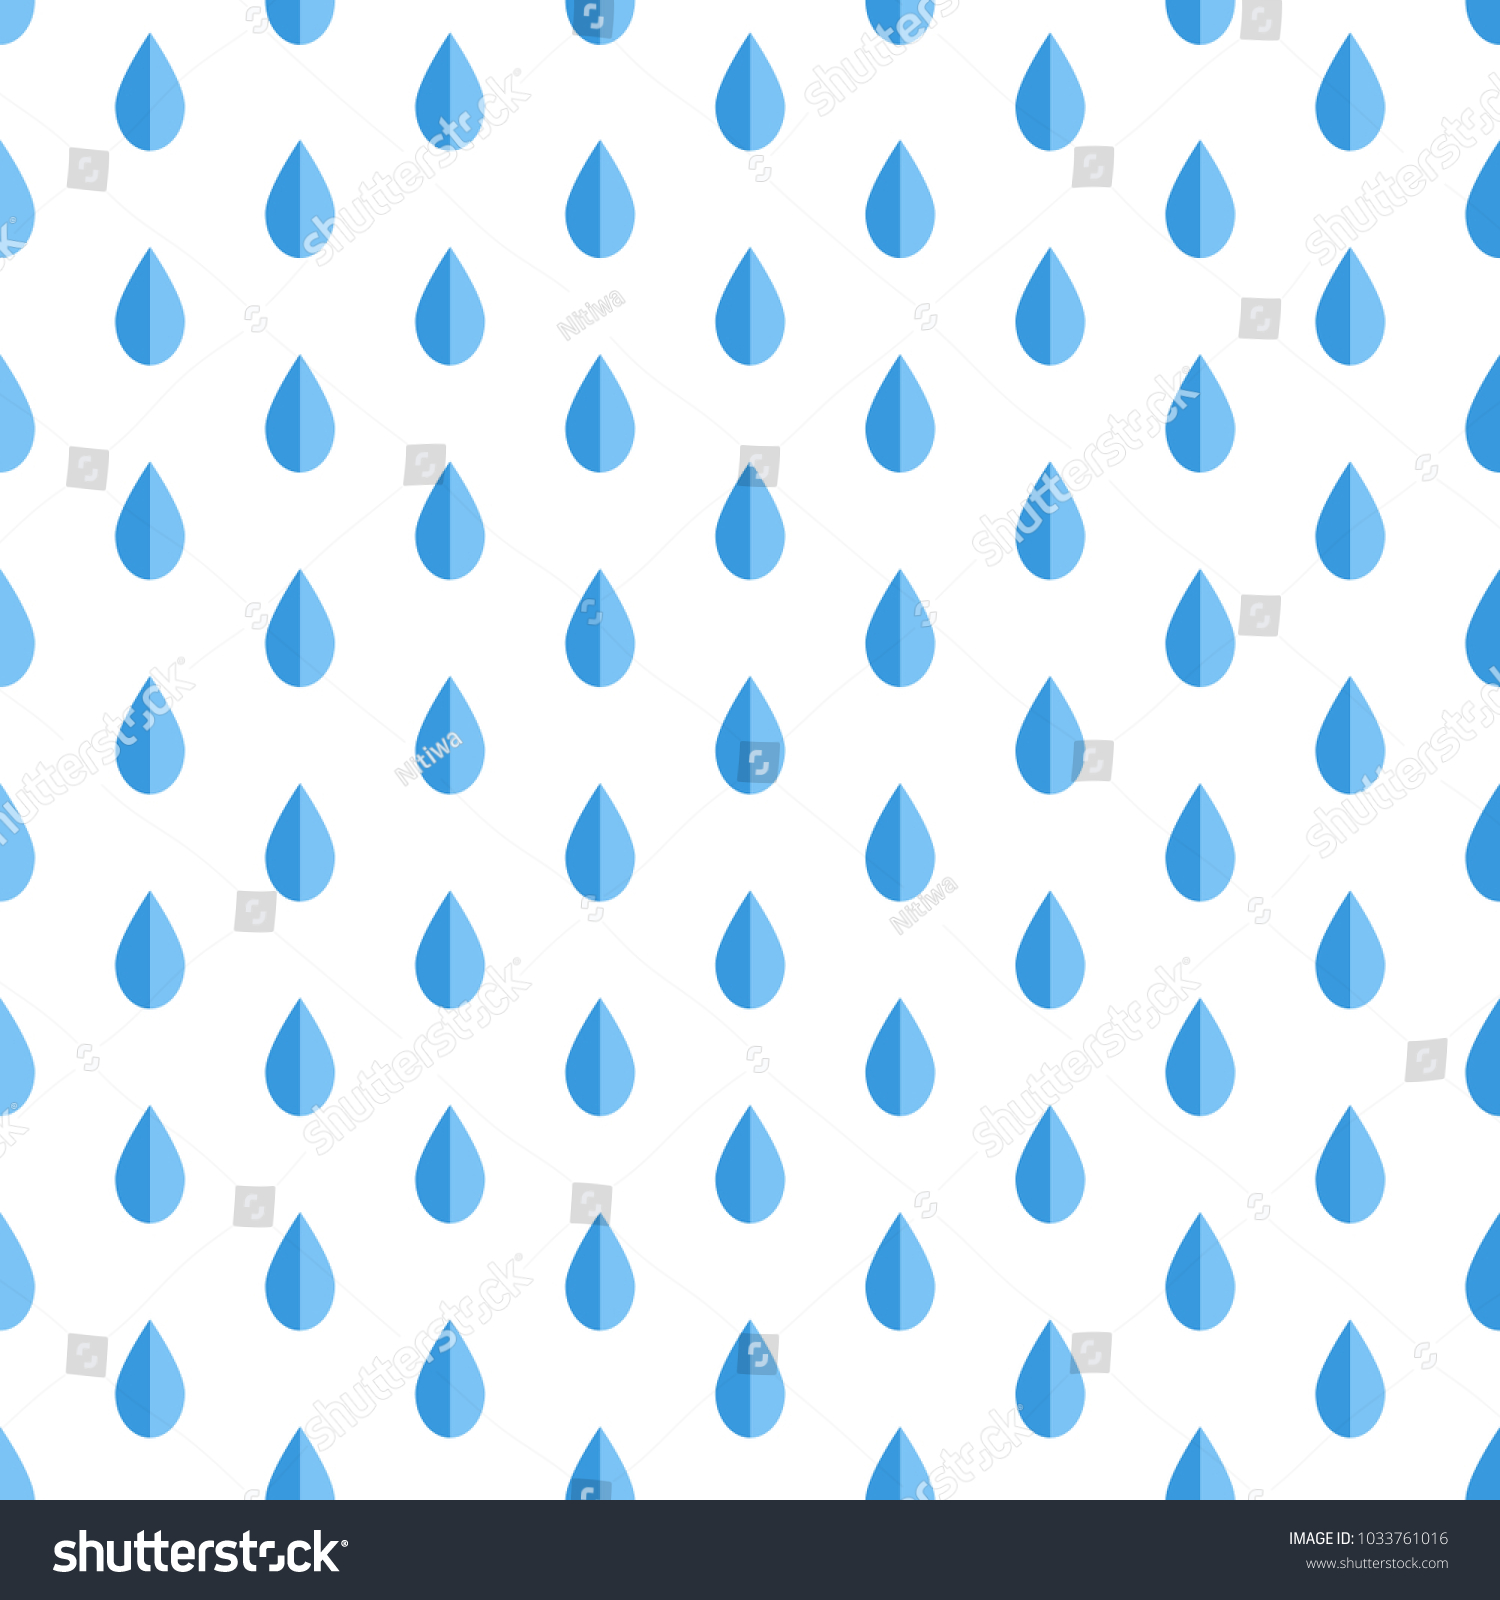 Cute Blue Symmetry Water Droplet Paperwork Stock Vector (Royalty Free ...